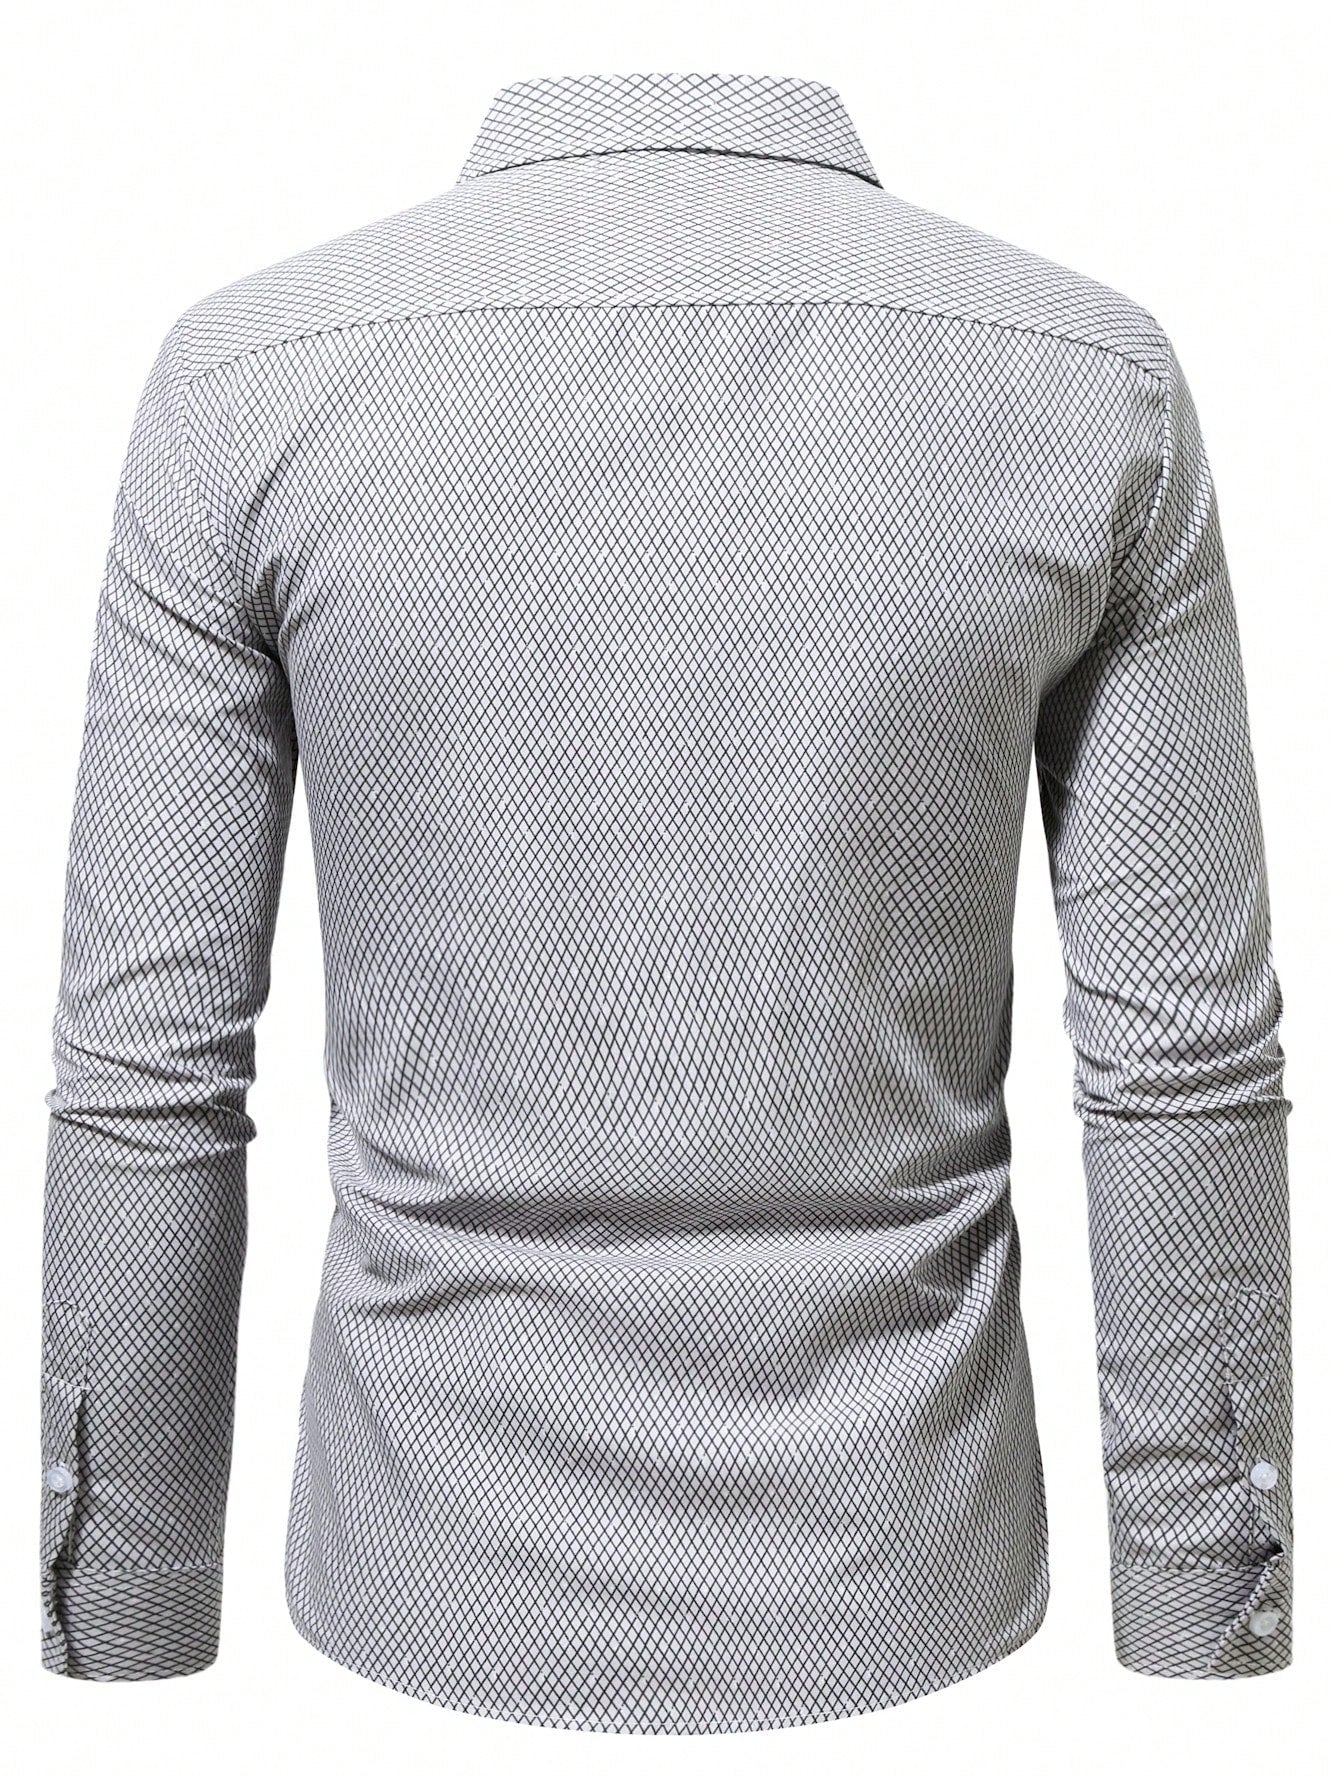 Manfinity Mode Men Argyle Print Shirt